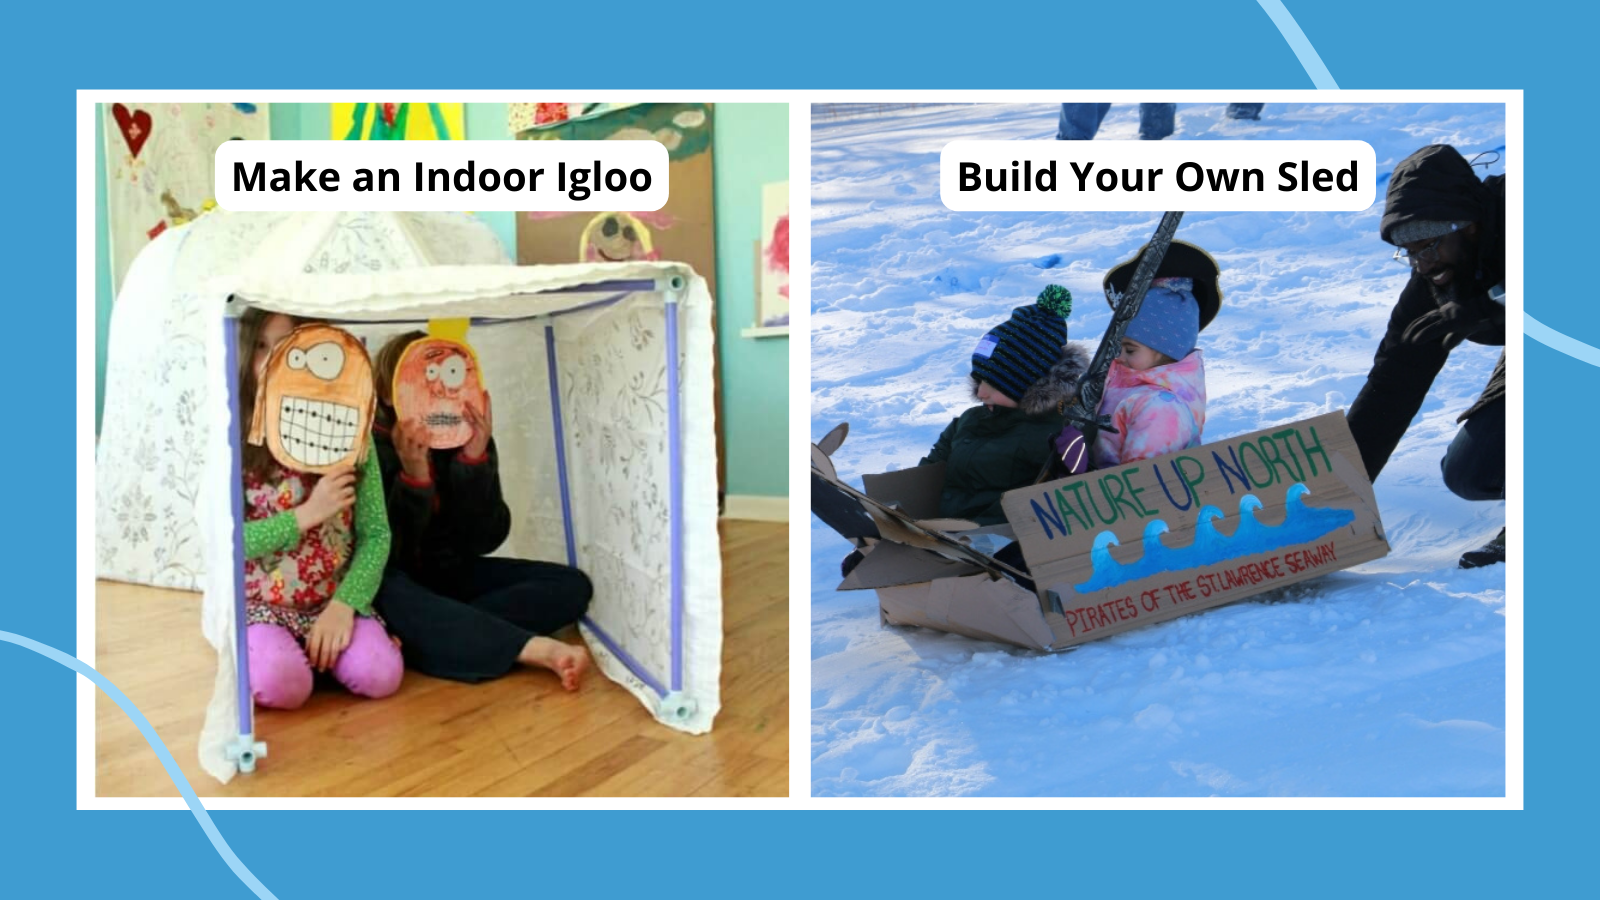 two fun winter activities sledding and building indoor igloos